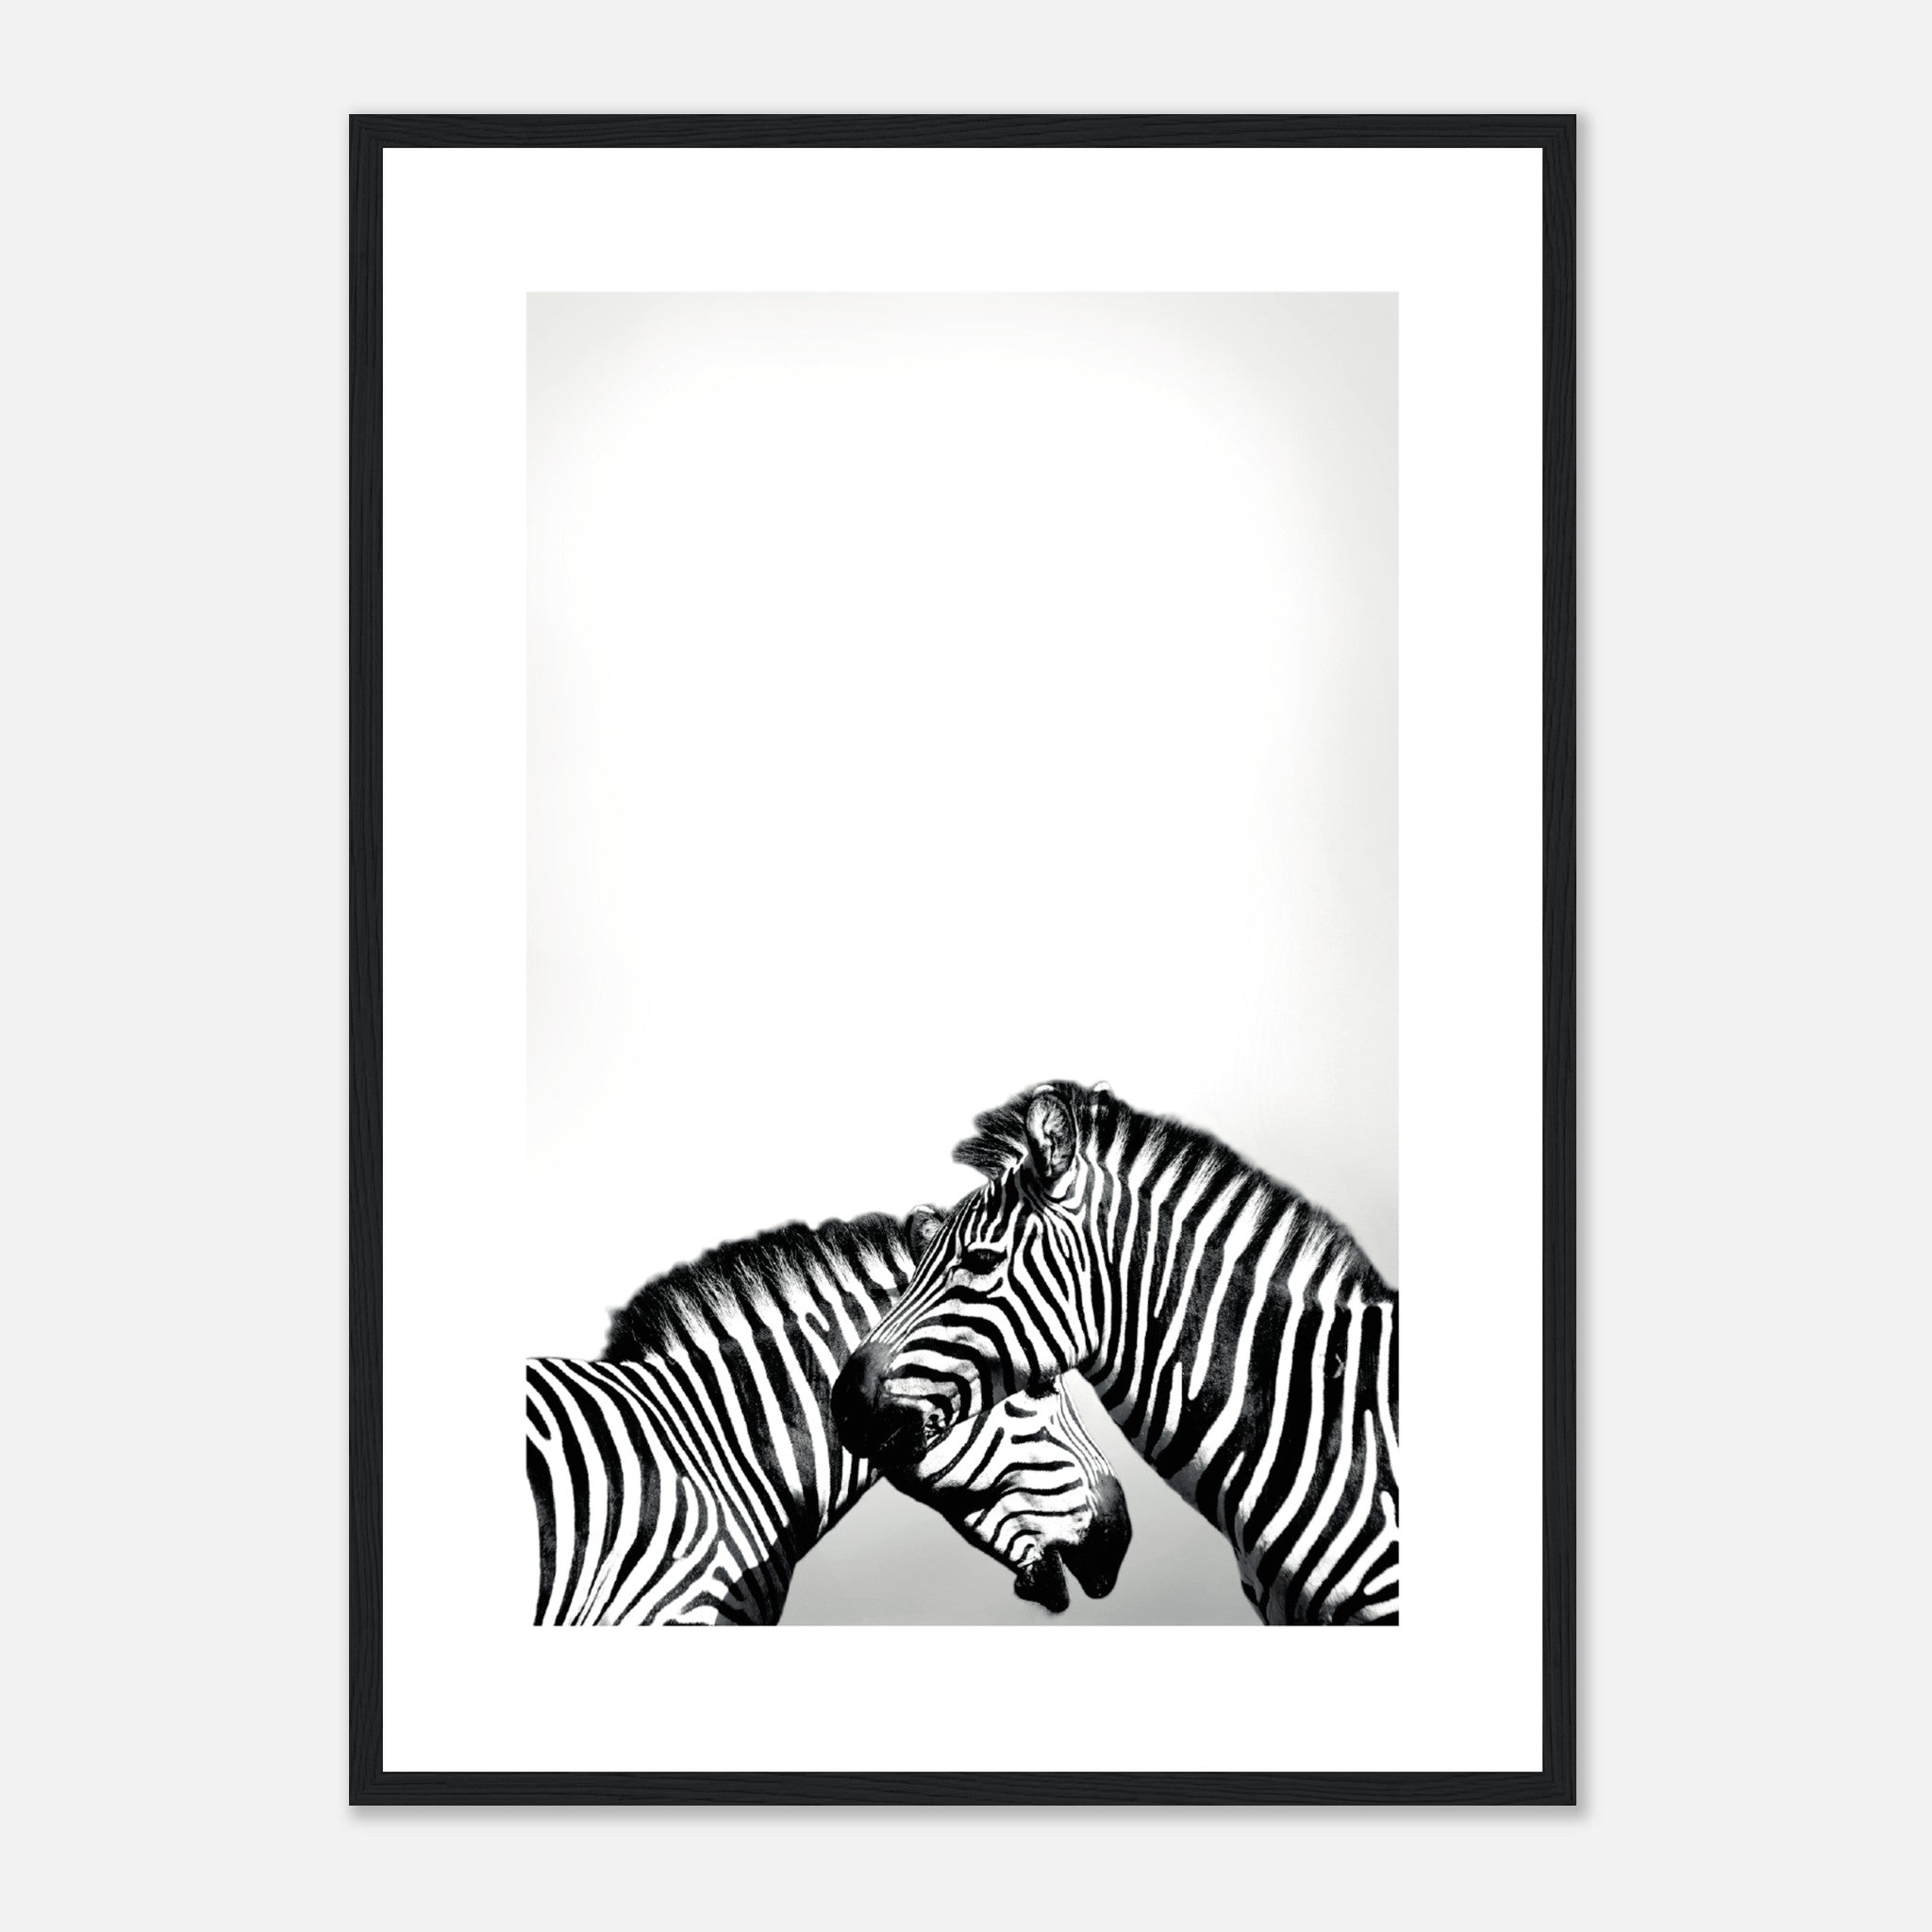 Zebras Poster